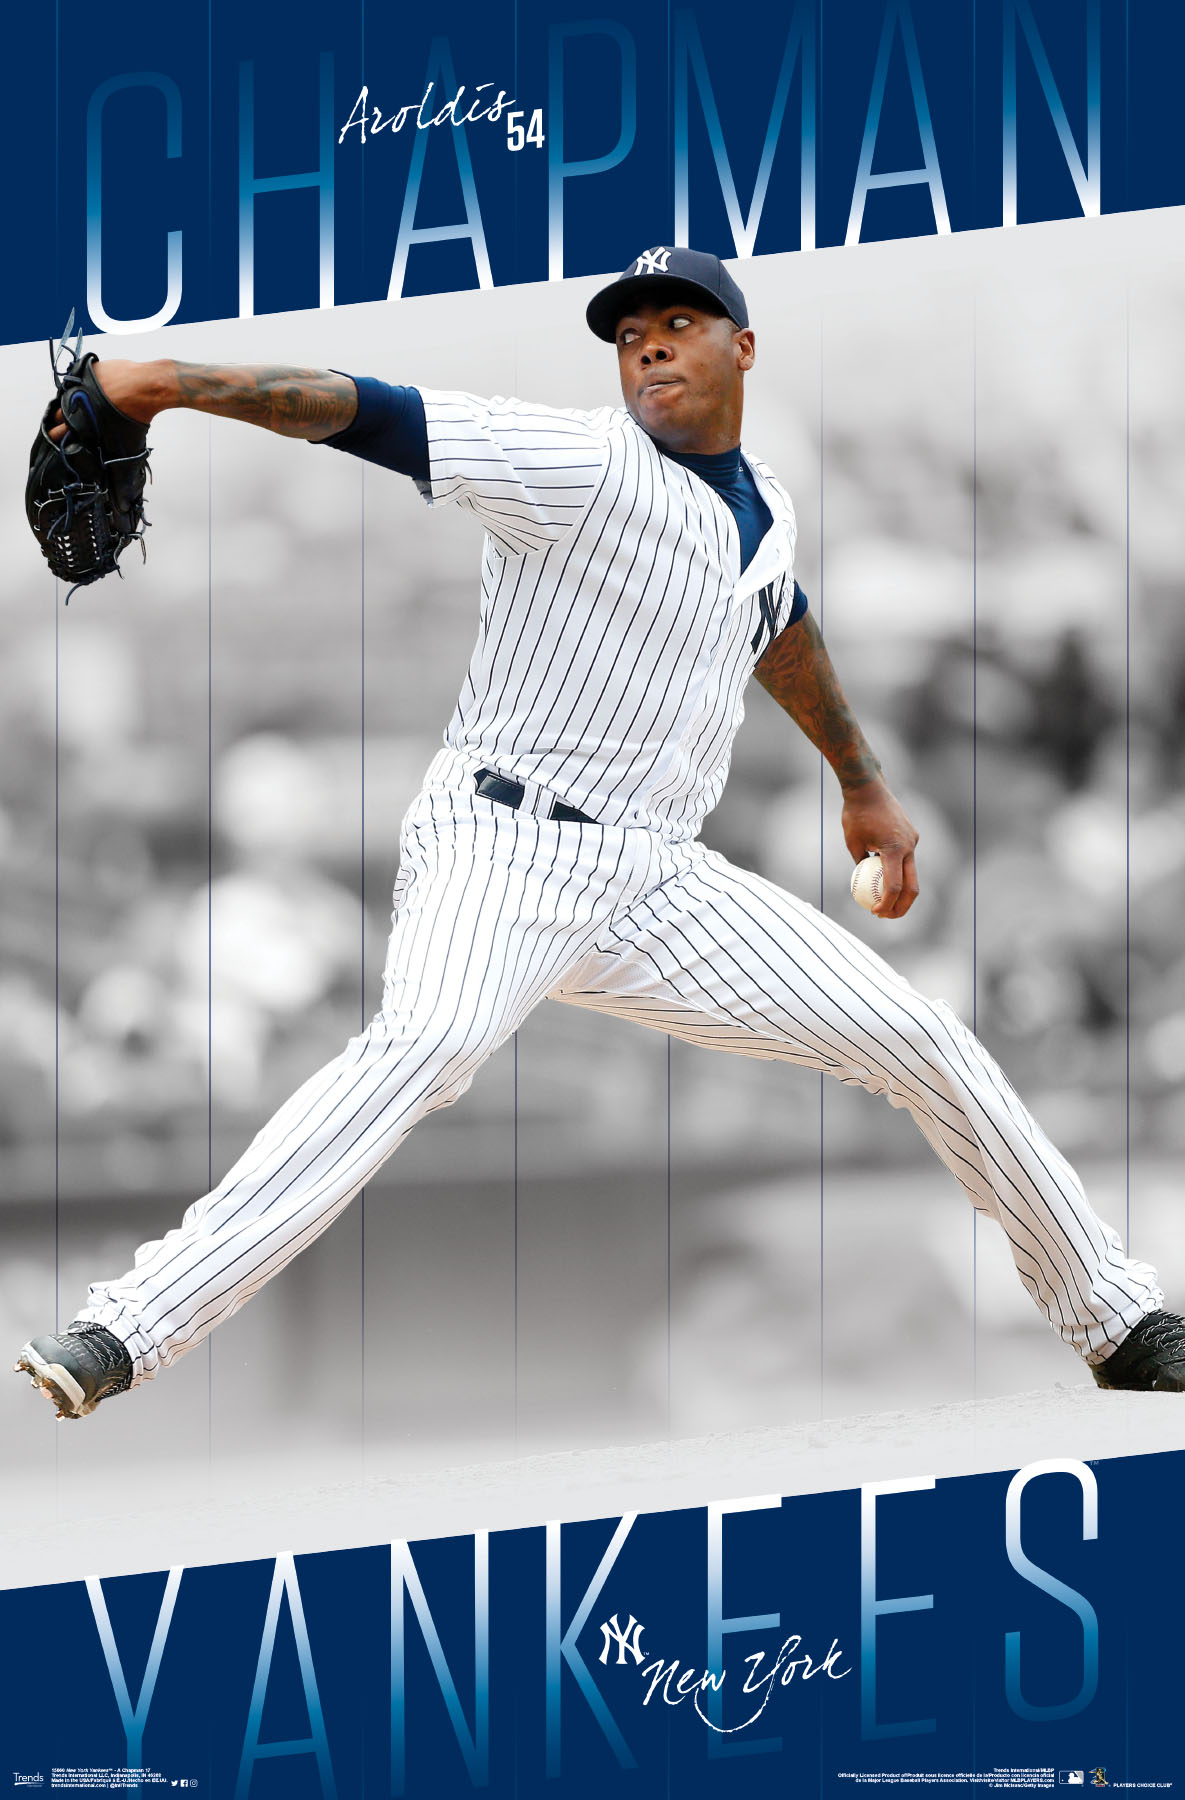 MLB New York Yankees - Aroldis Chapman 17 Wall Poster, 22.375